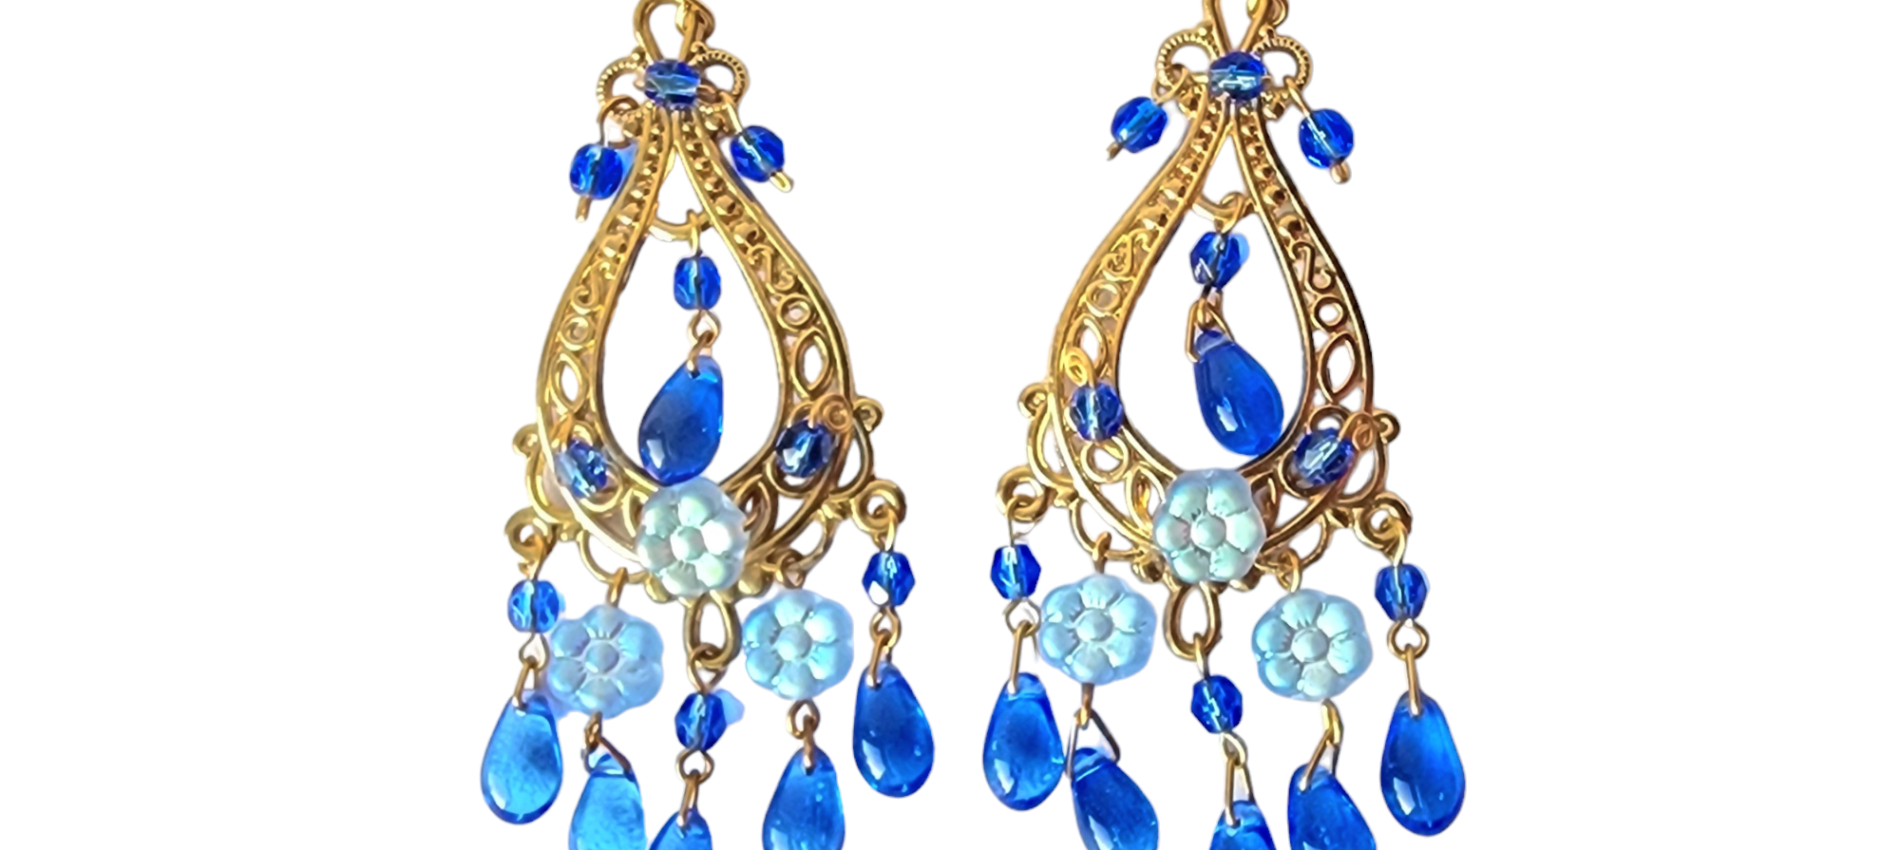 Golden-Blue-Glass-Chandelier-Earrings-Upcycled-New